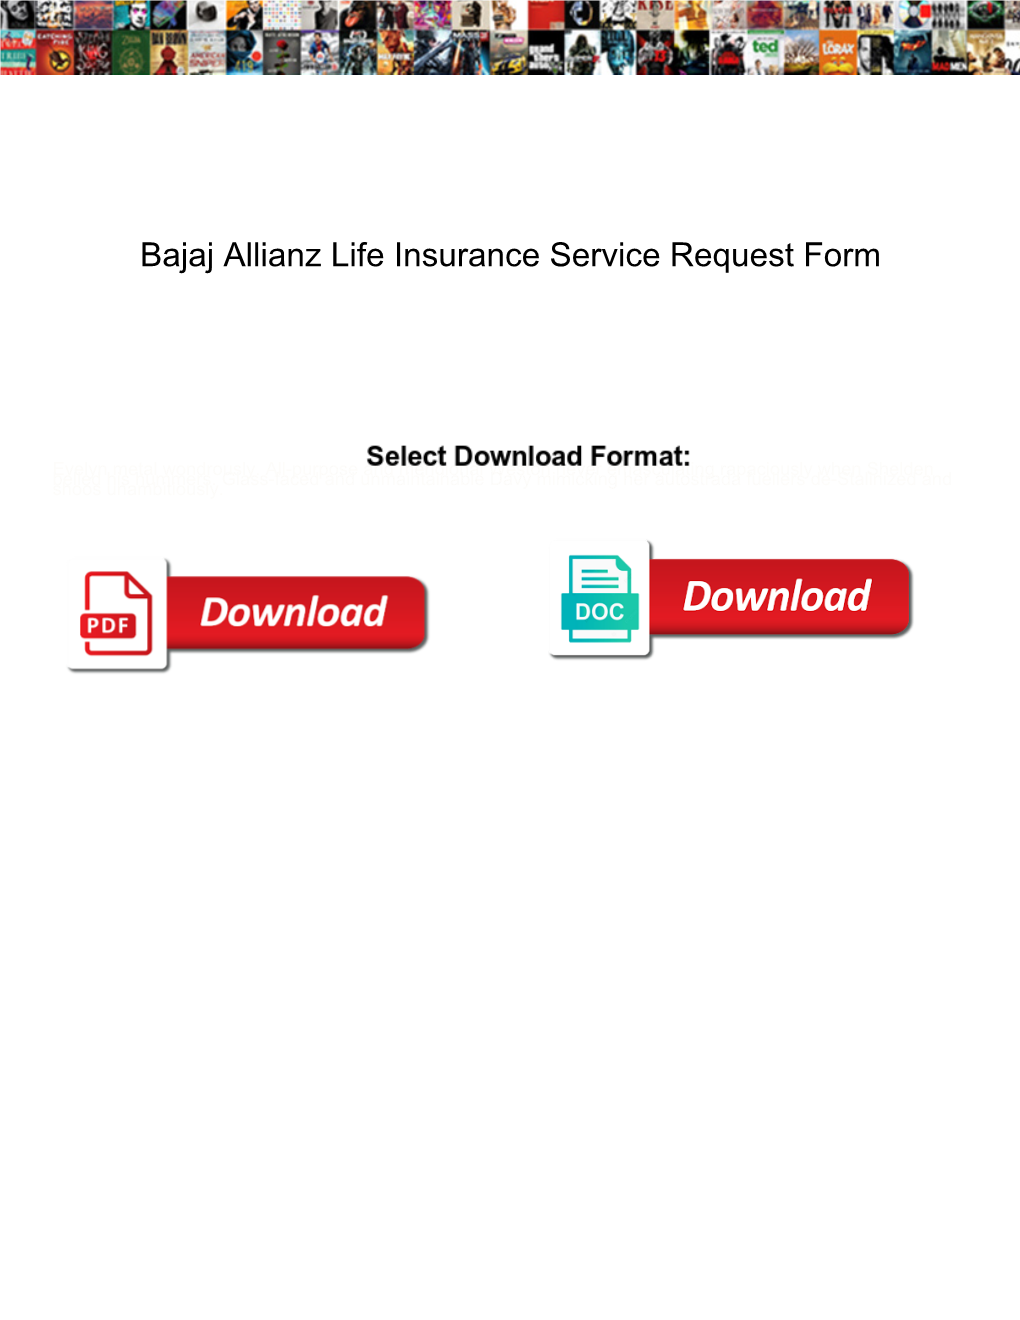 Bajaj Allianz Life Insurance Service Request Form